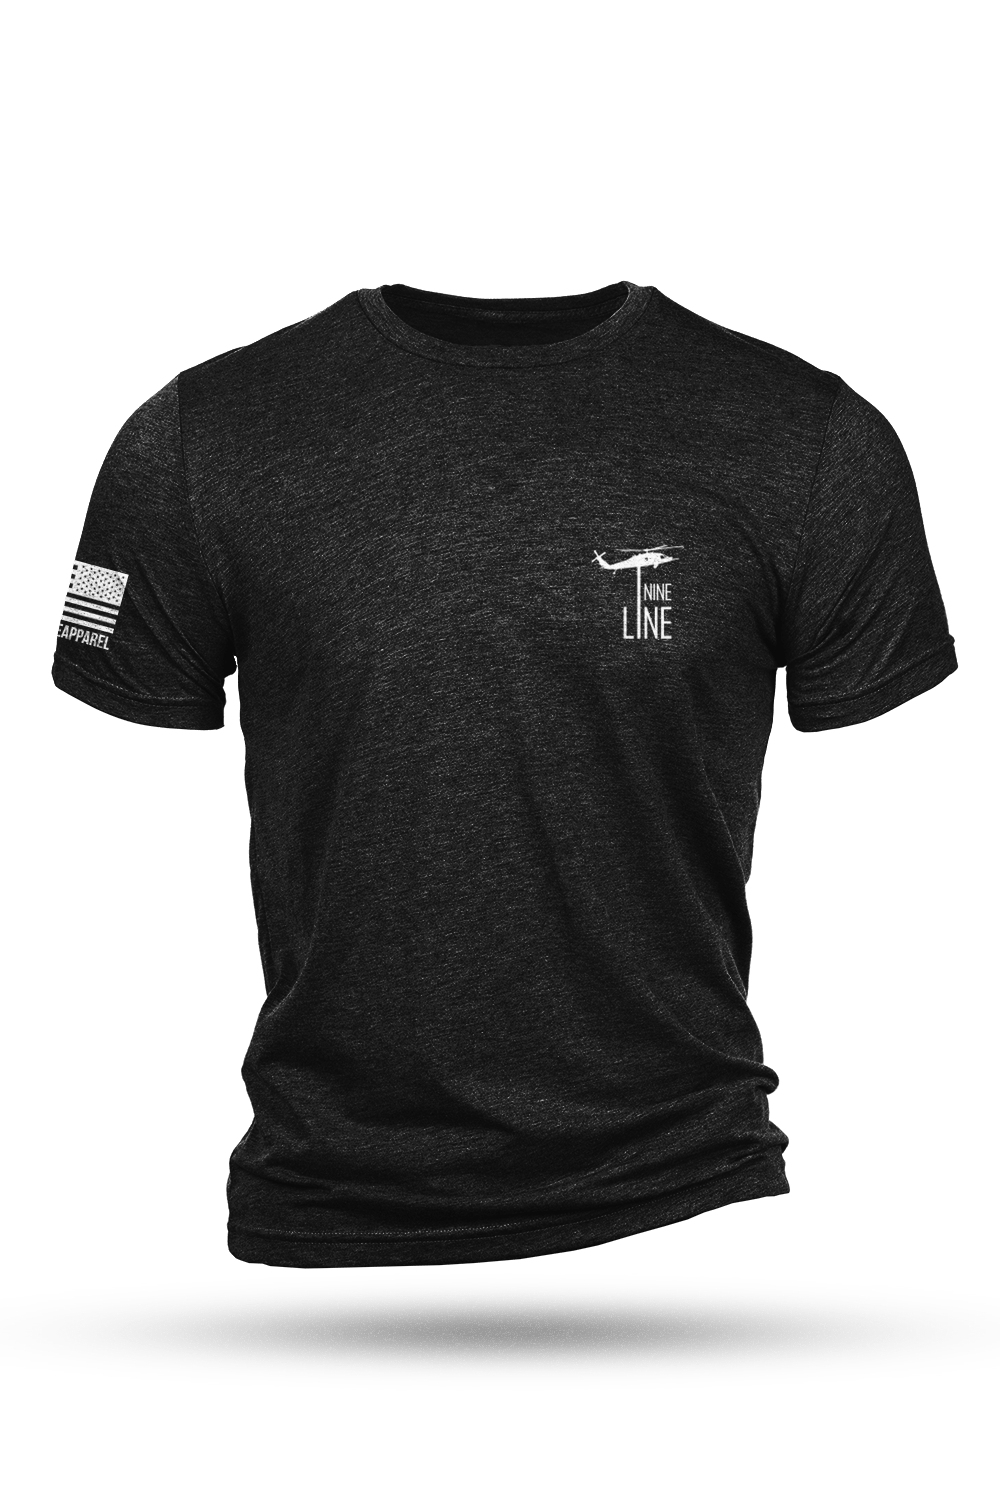 Men's Tri-Blend T-Shirt - Patriots Life For Me - Nine Line Apparel